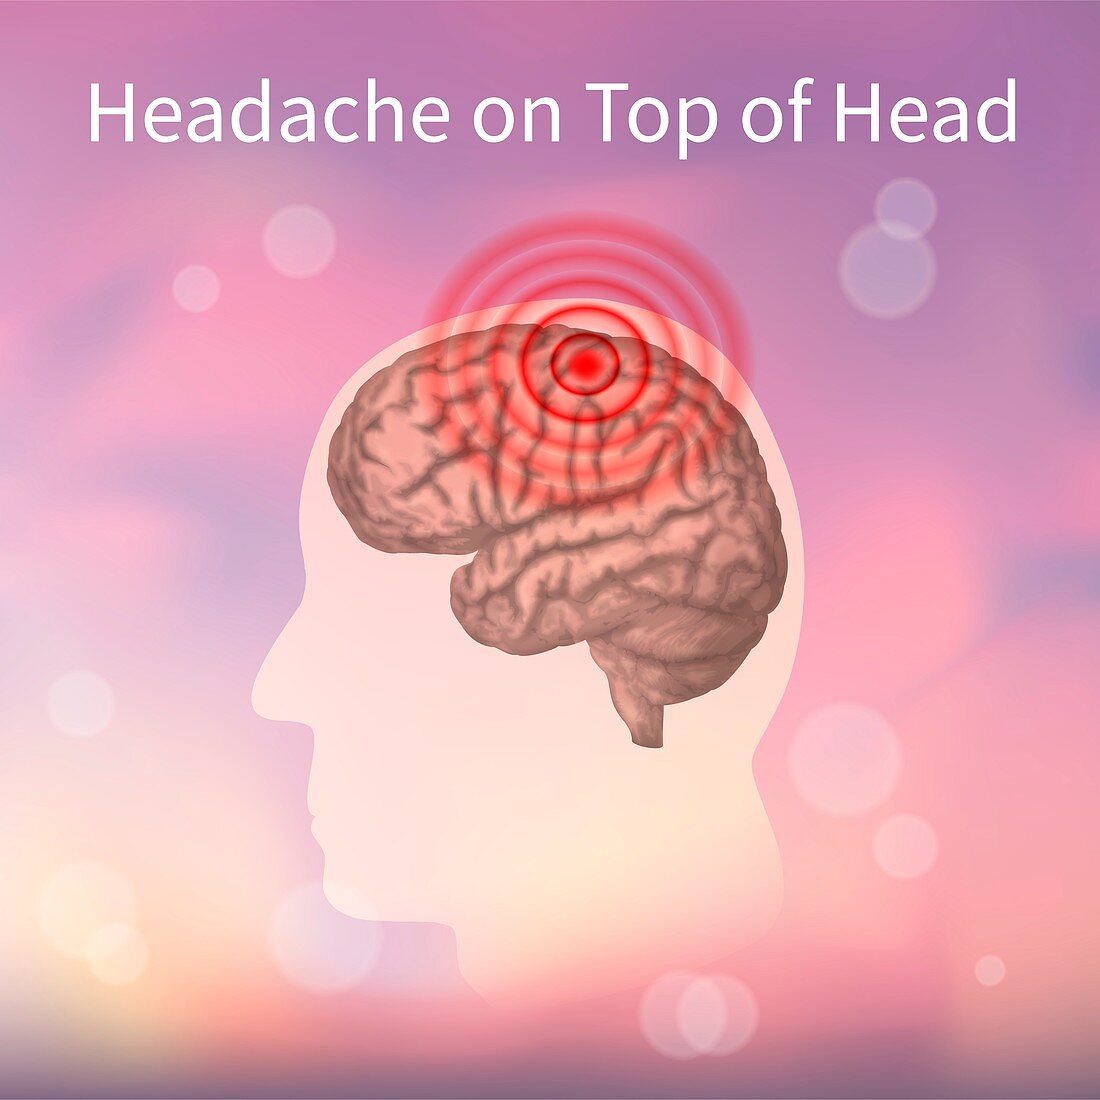 Headache on top of the head, illustration